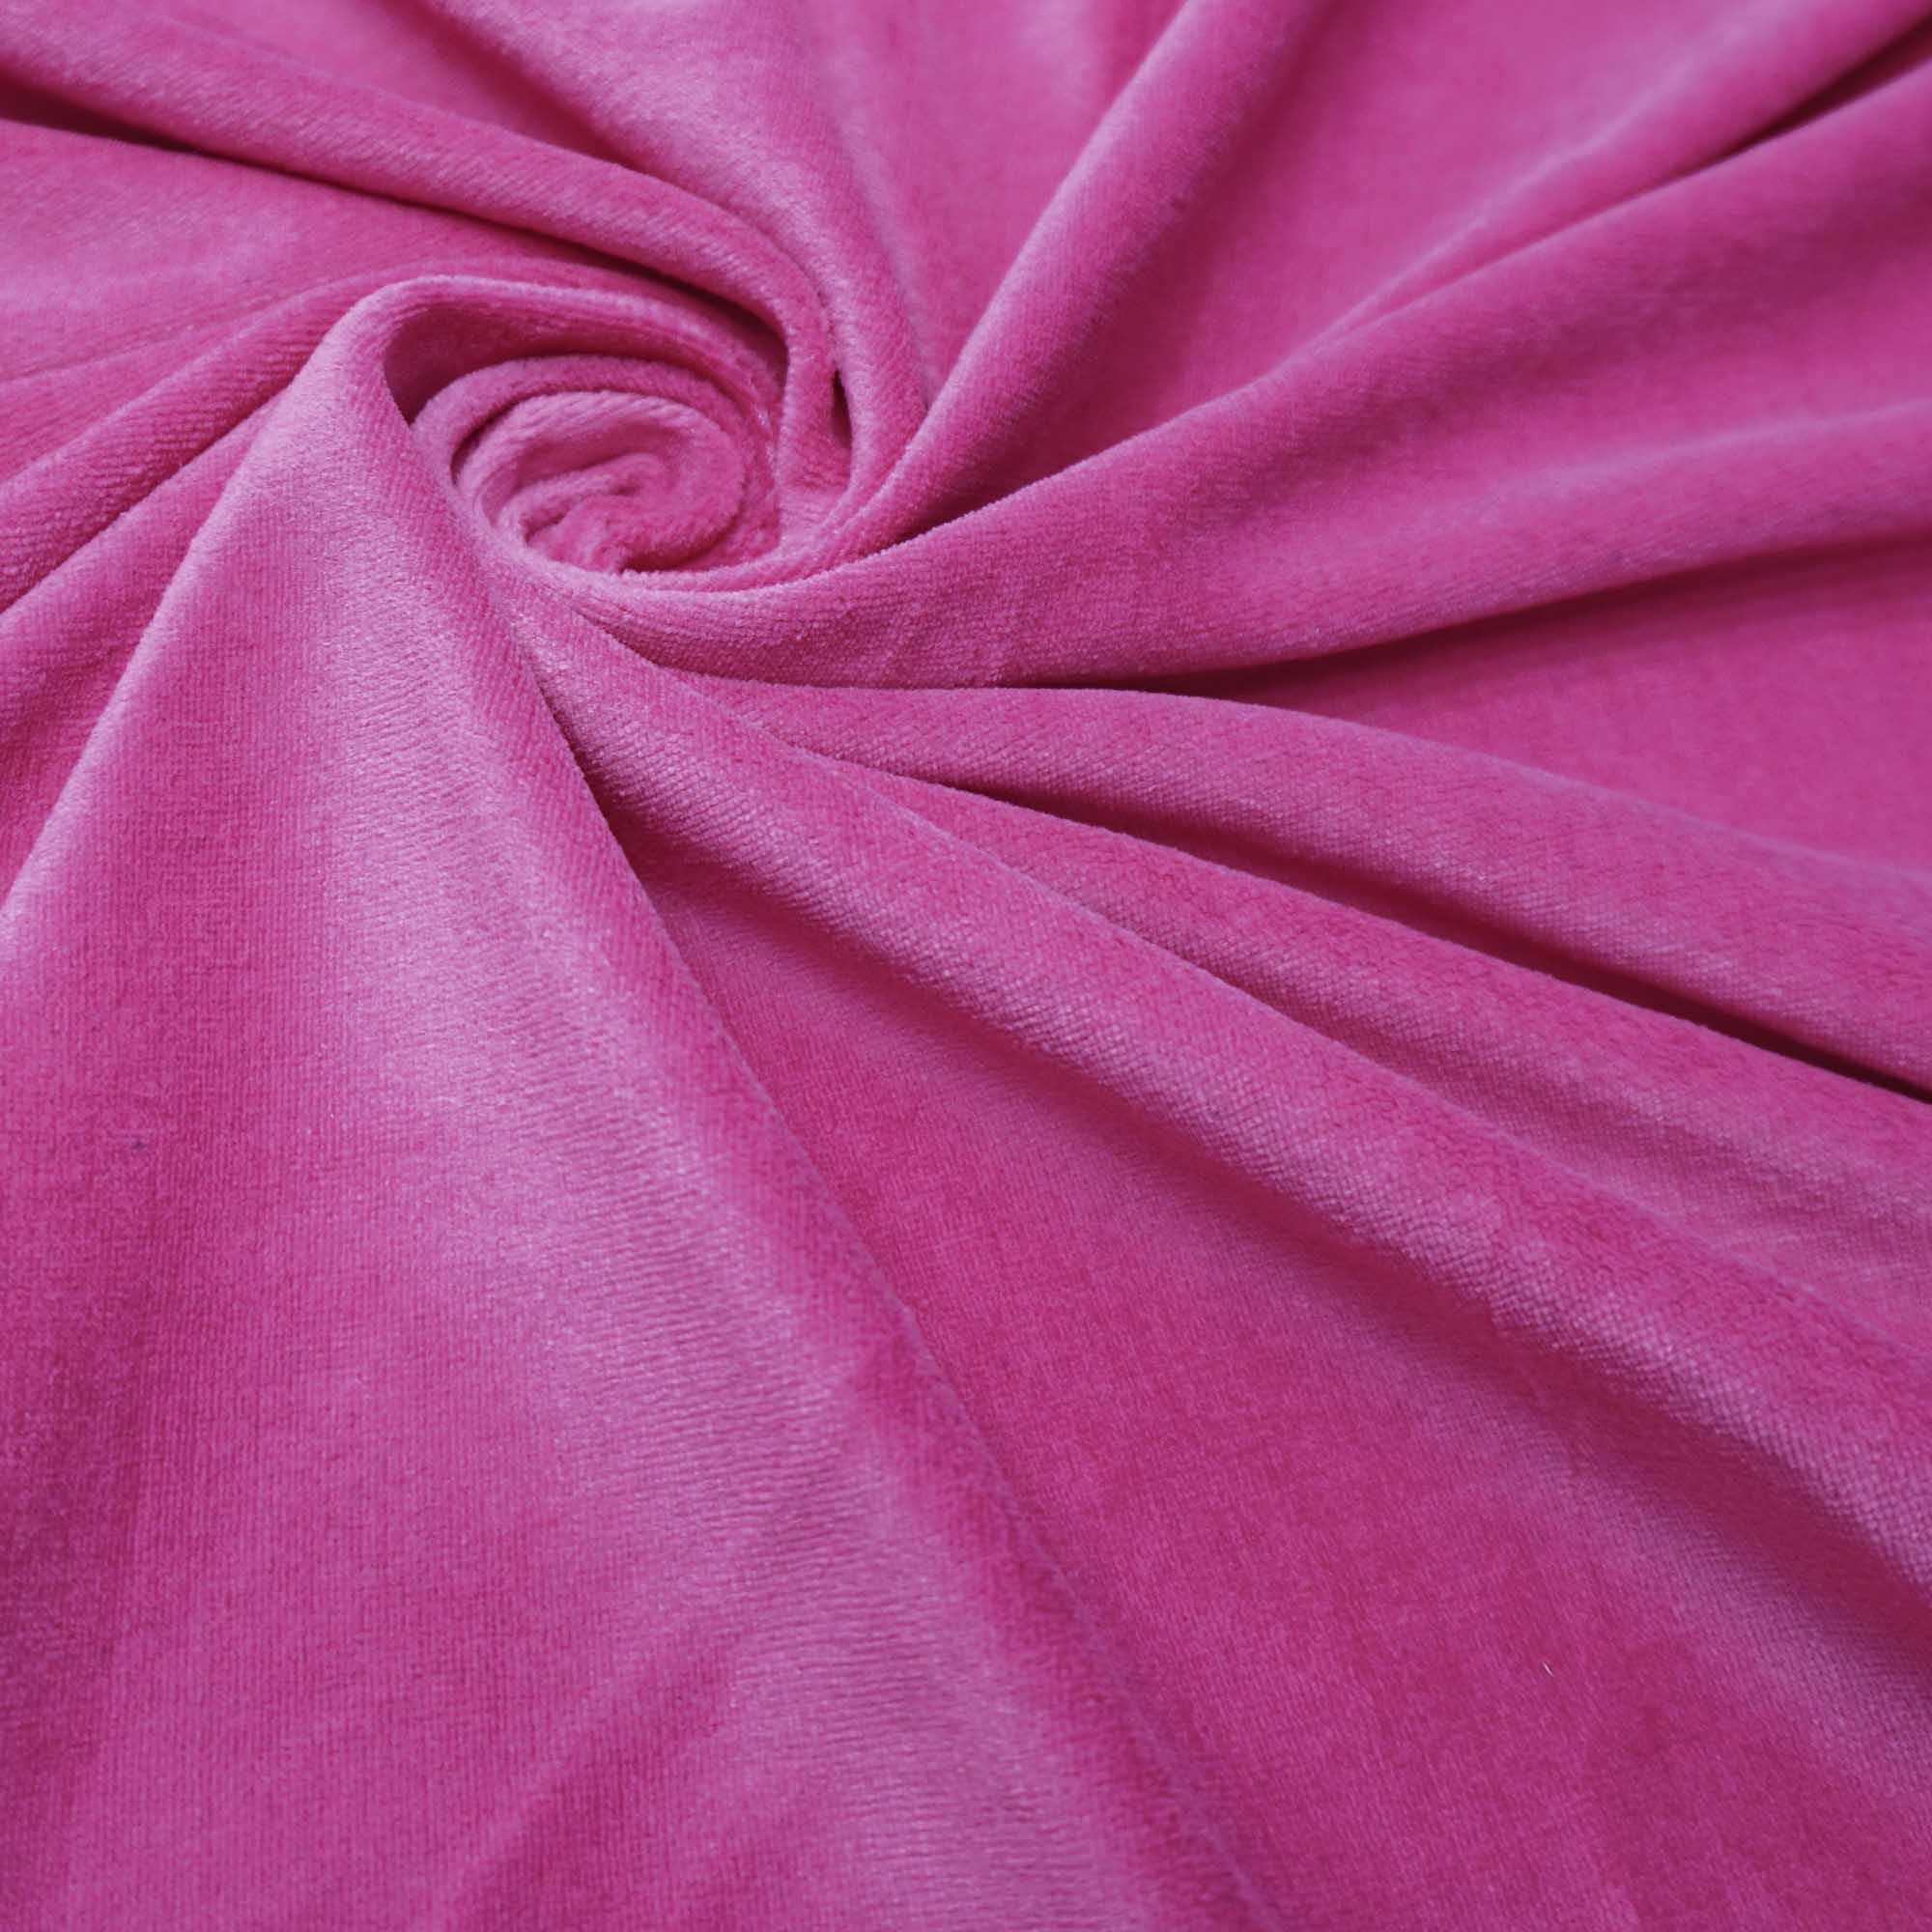 Tecido plush pink